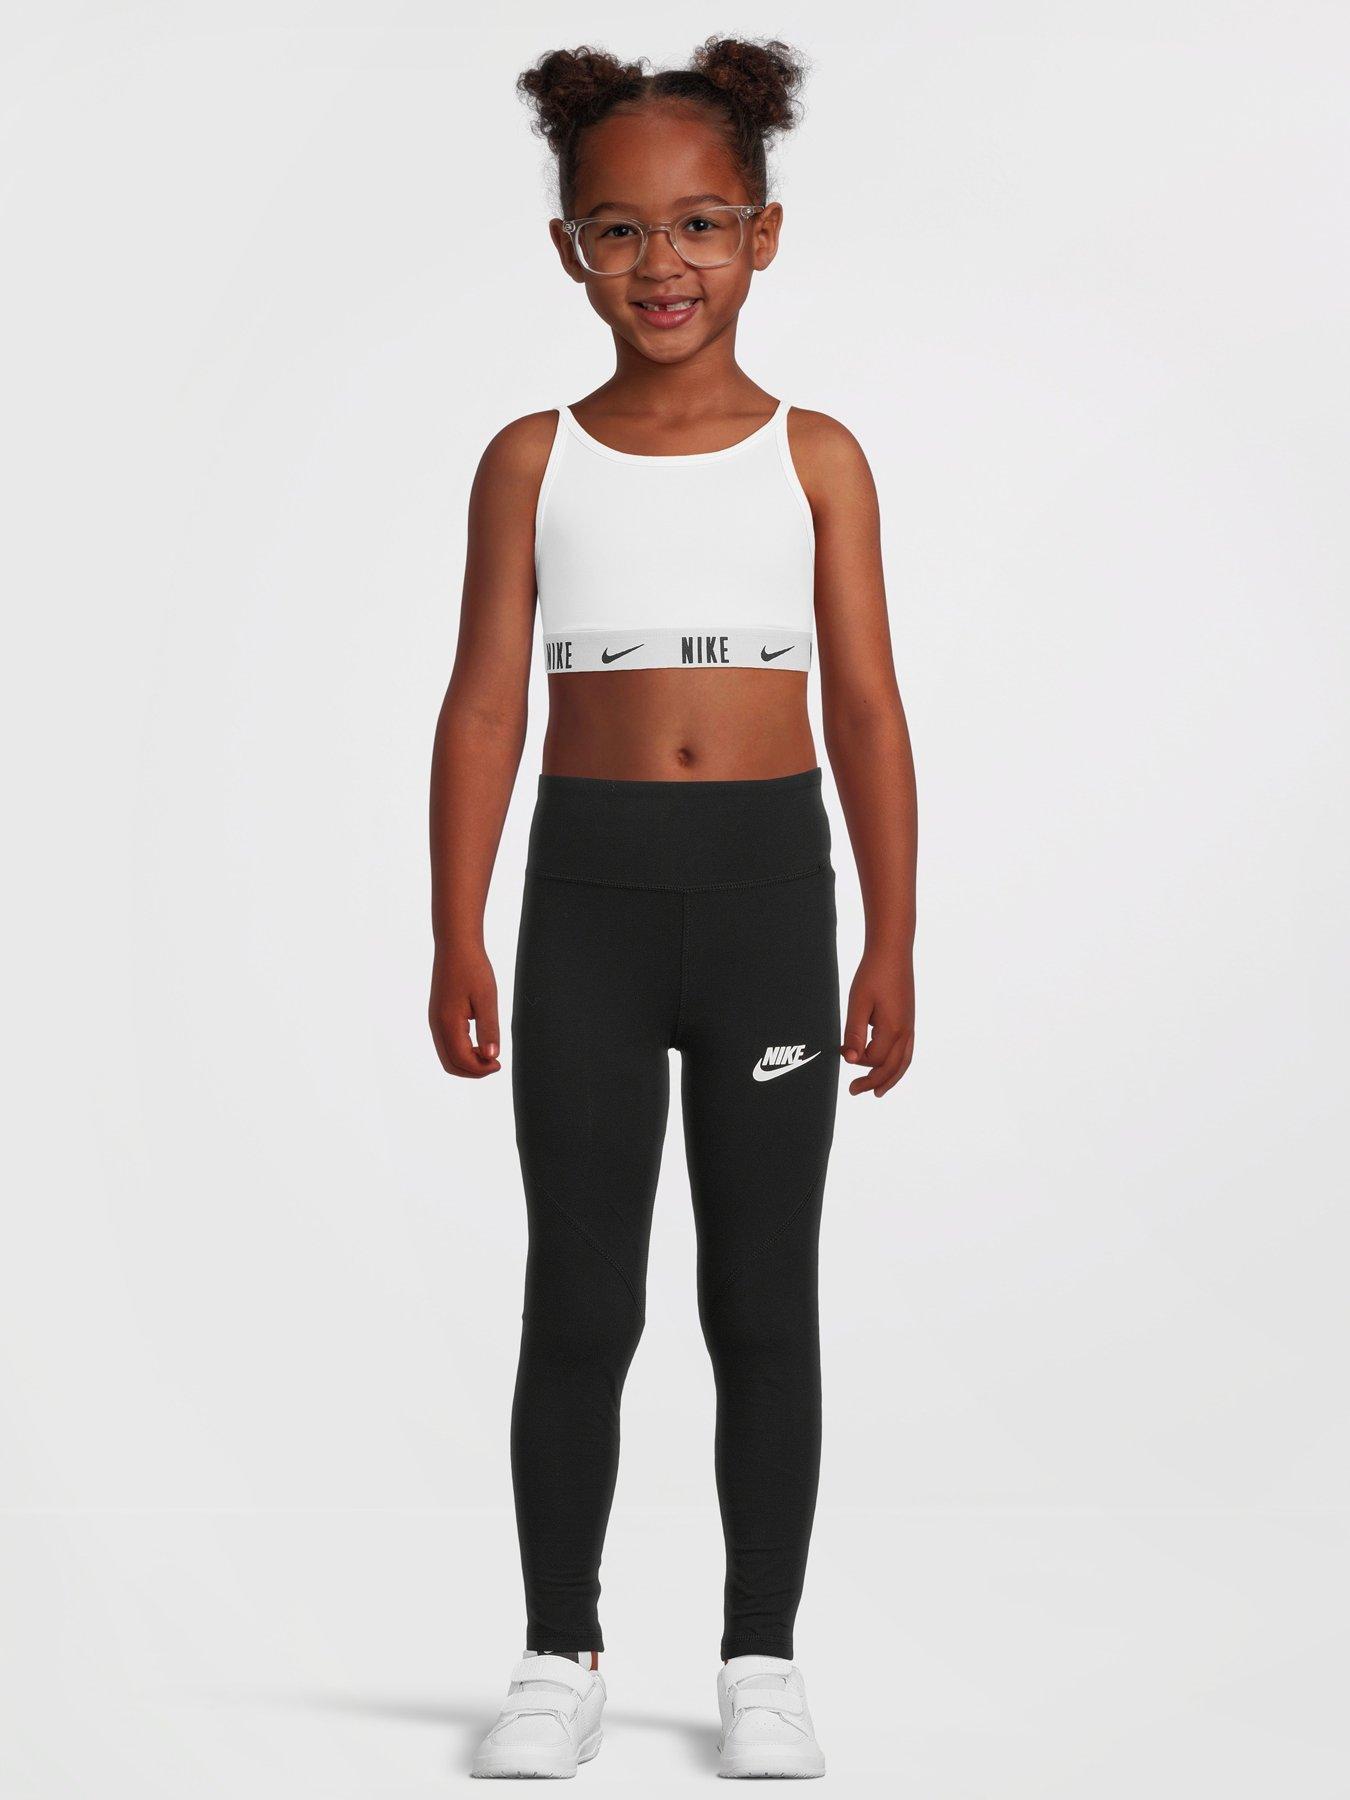 Nike Girls Bra Youth Large White Sports Bra Dri-Fit Trophy Training Older  Kids